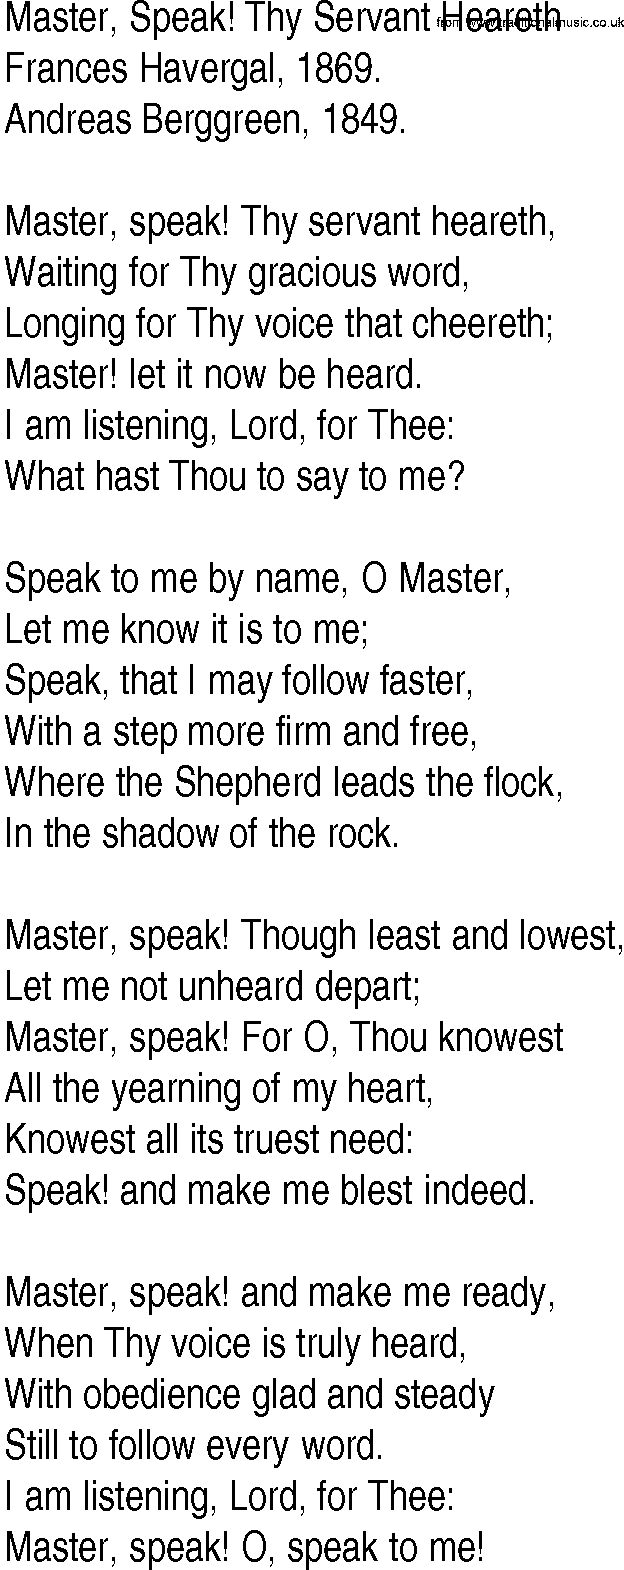 Hymn and Gospel Song: Master, Speak! Thy Servant Heareth by Frances Havergal lyrics